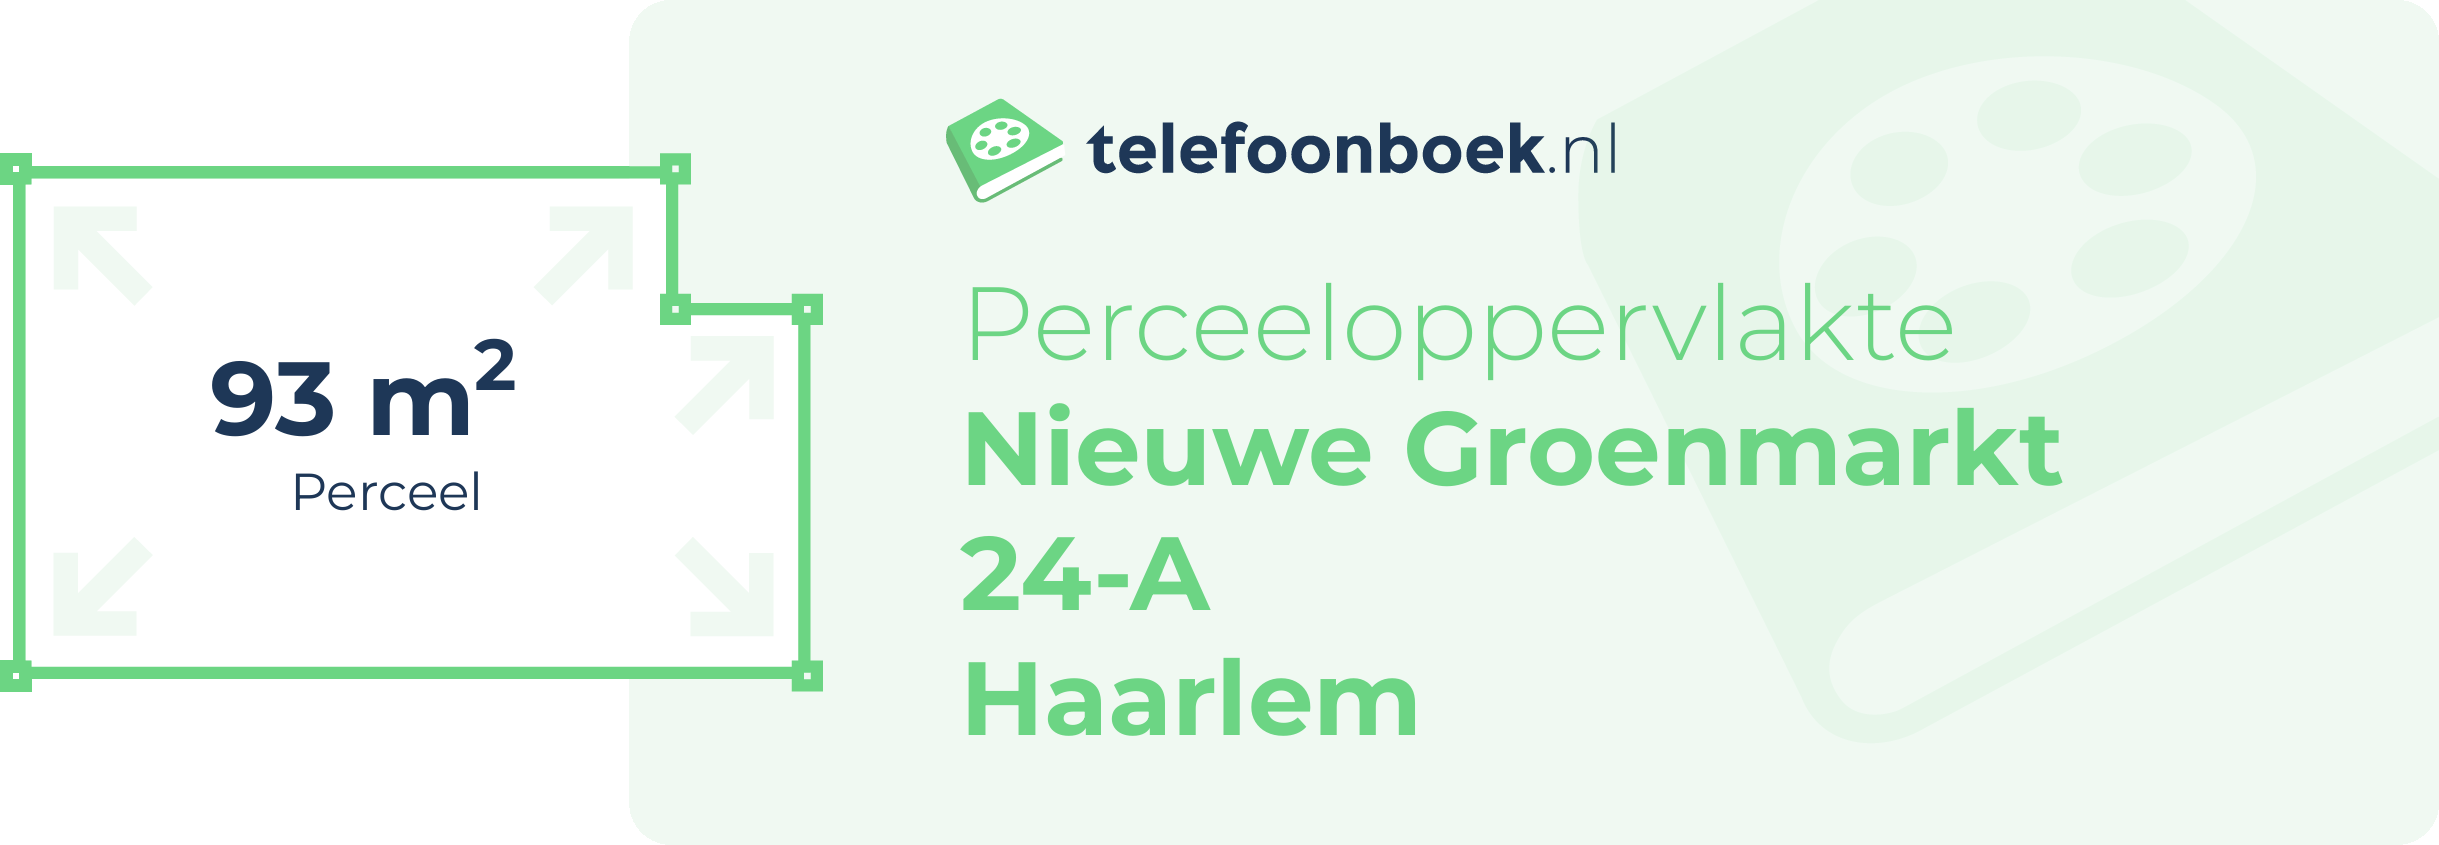 Perceeloppervlakte Nieuwe Groenmarkt 24-A Haarlem